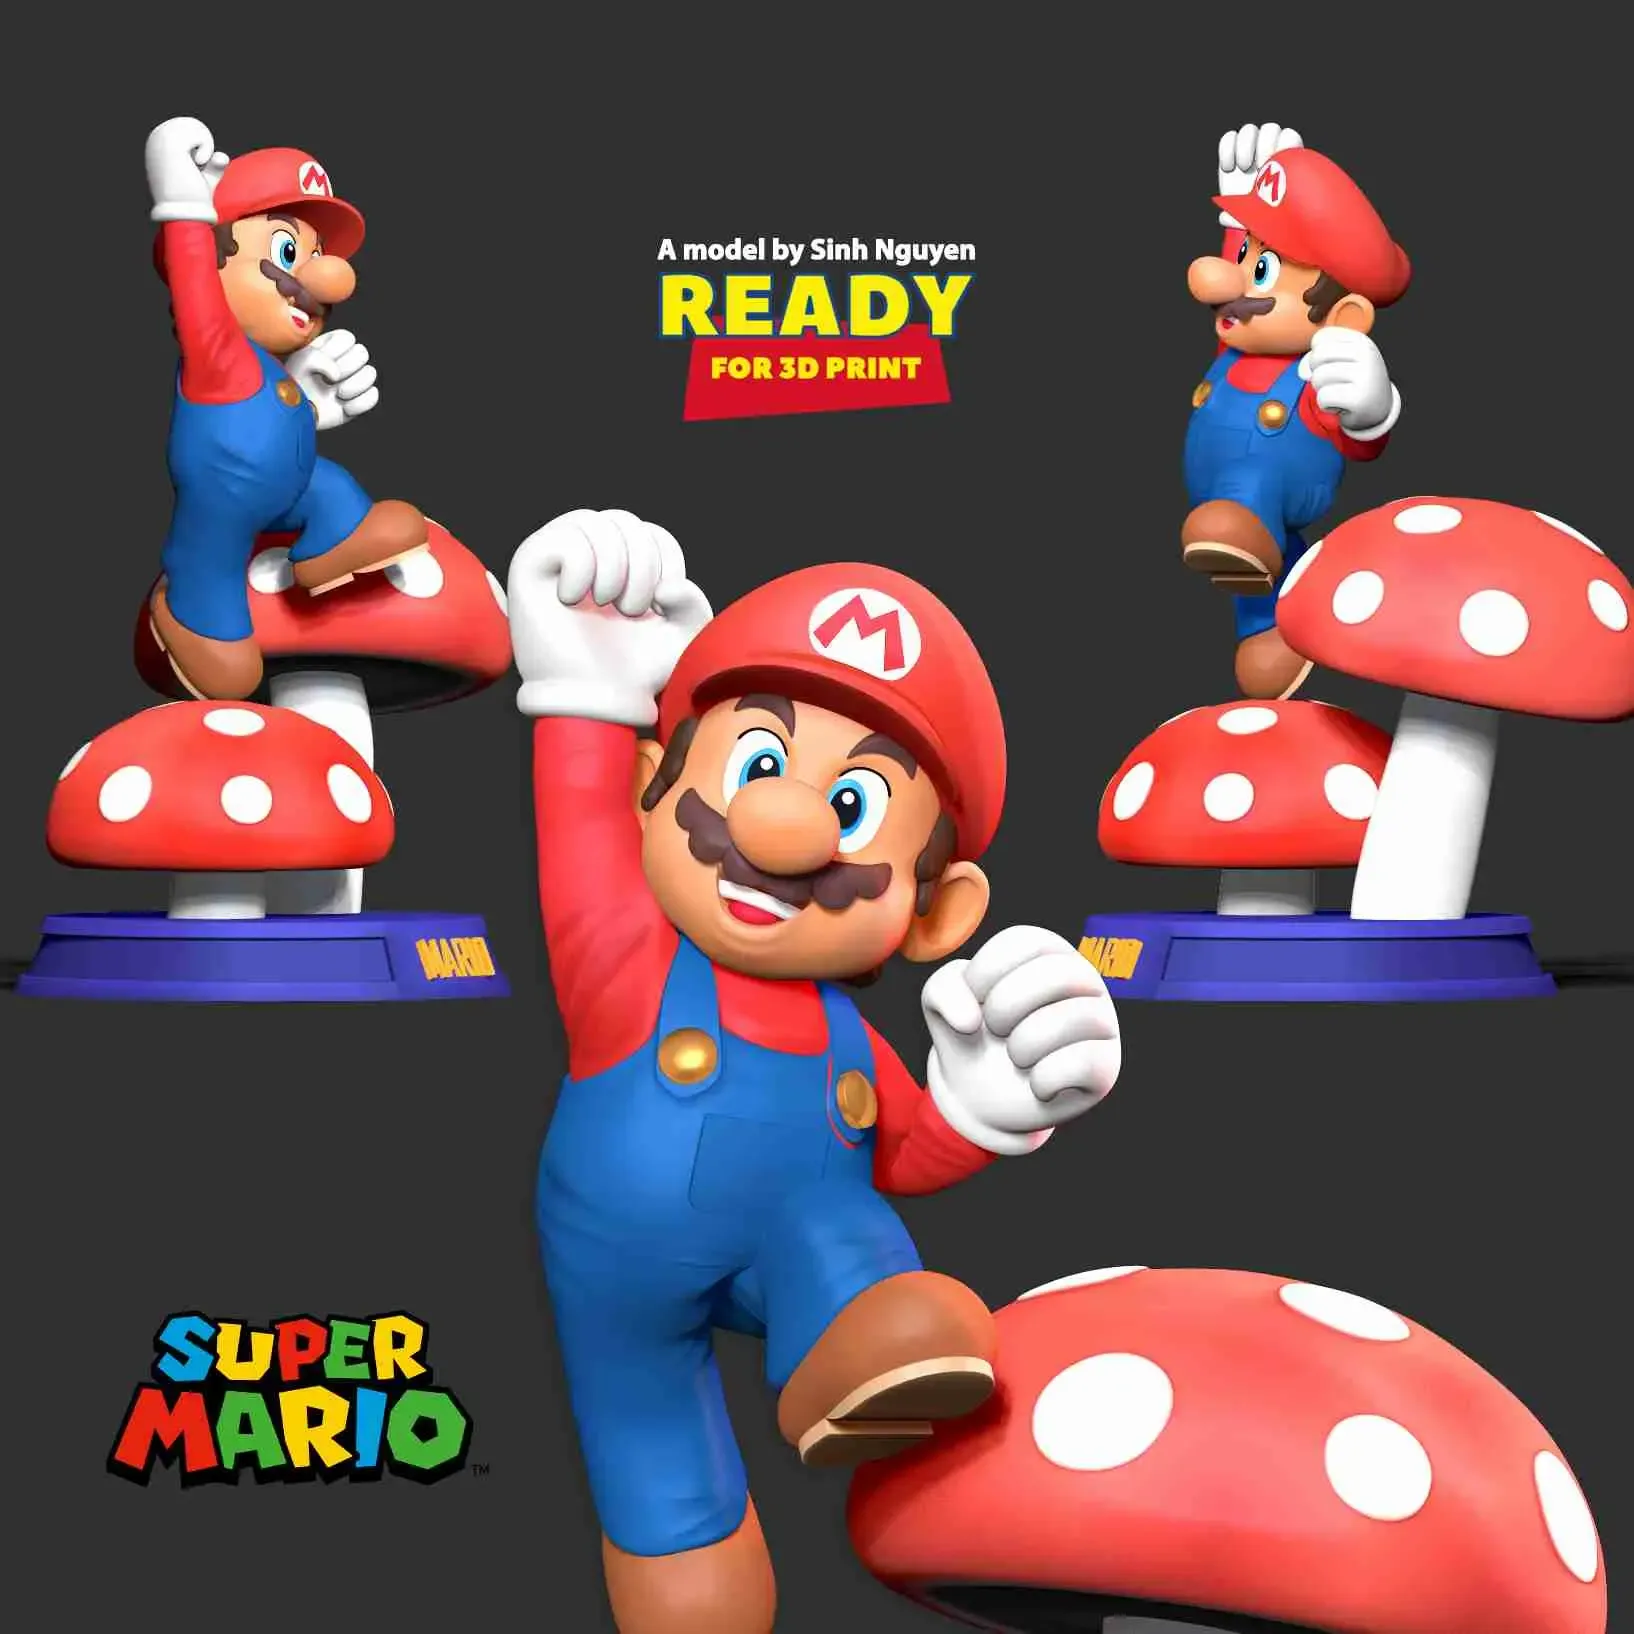 The Super Mario Bros